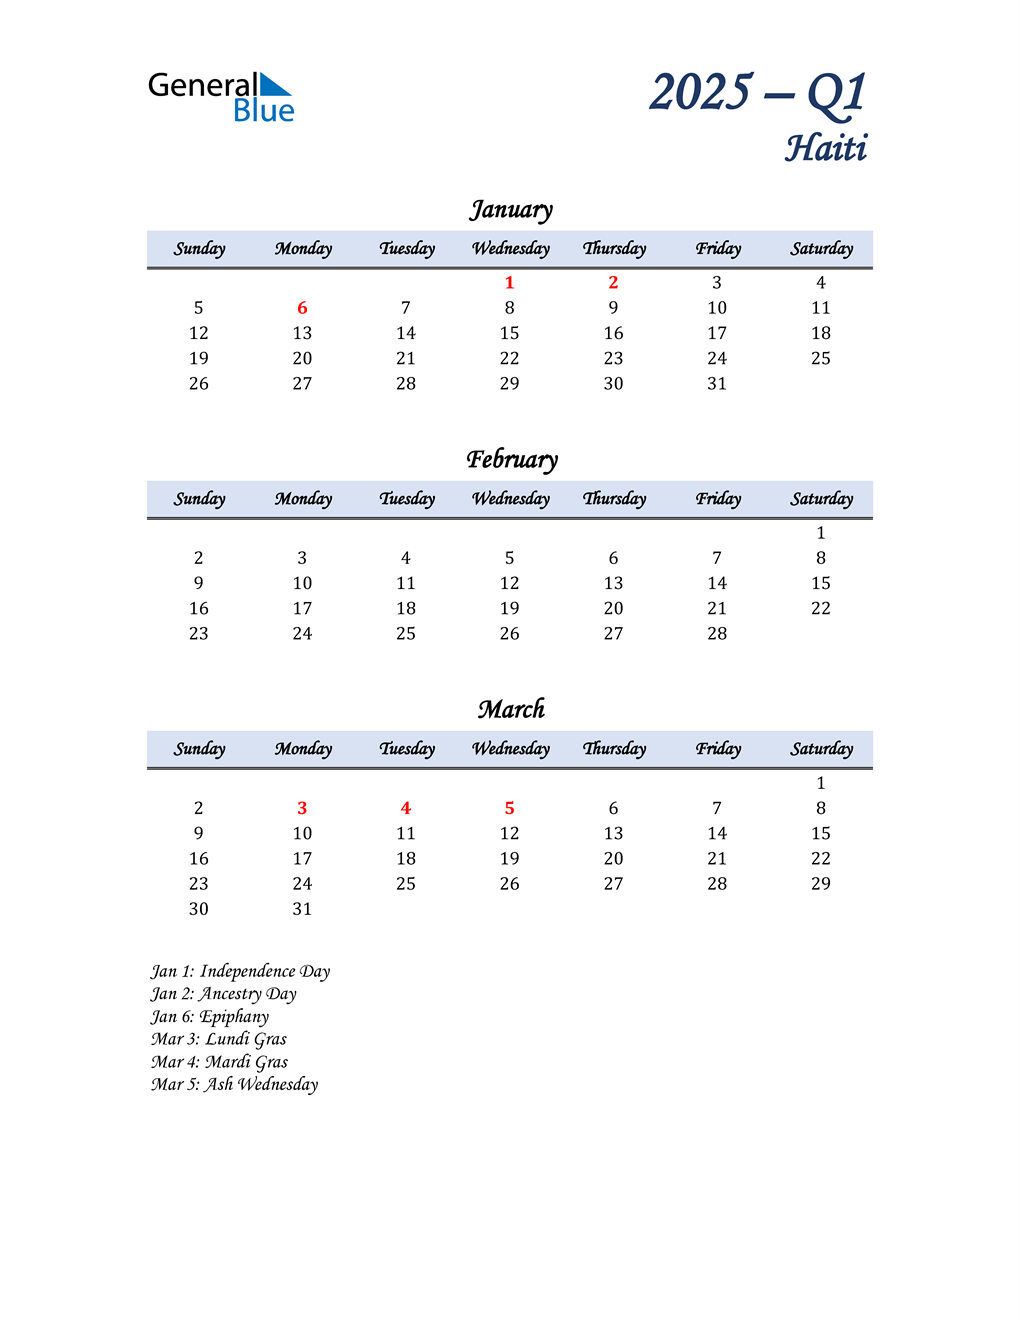  January, February, and March Calendar for Haiti